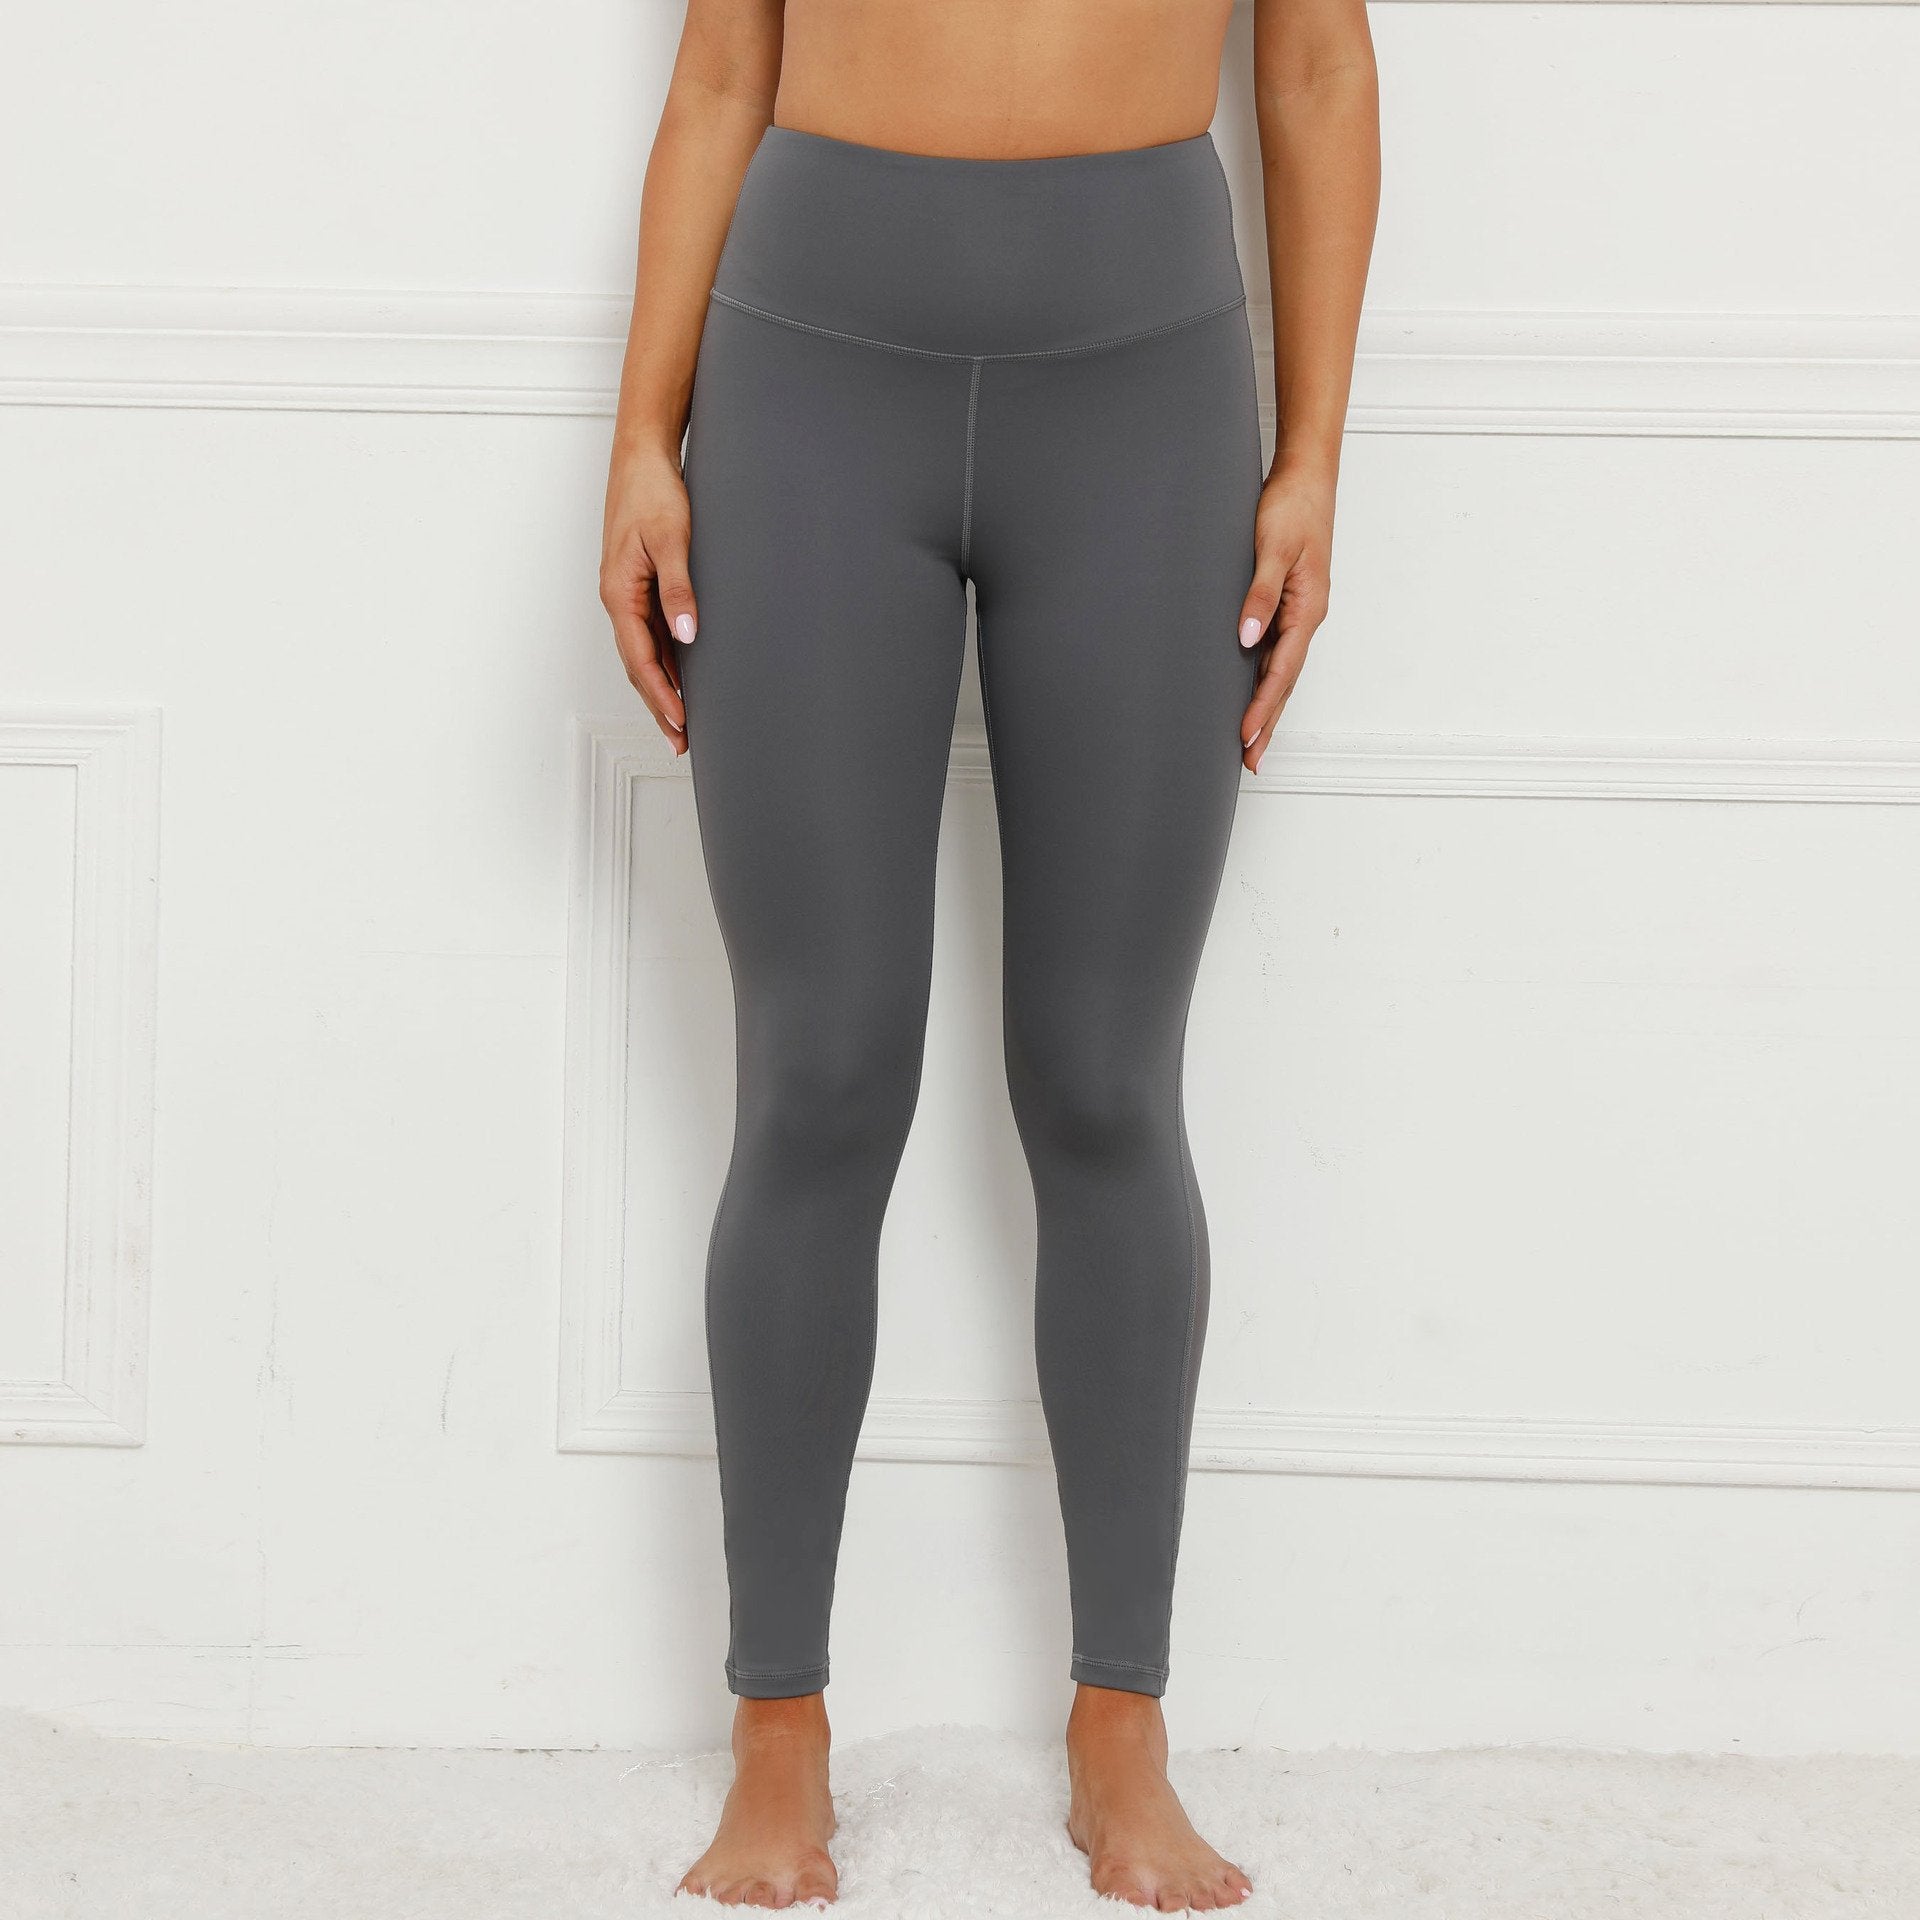 Sexy Elastic Exercising High Waist Yoga Leggings-Activewear-Free Shipping at meselling99